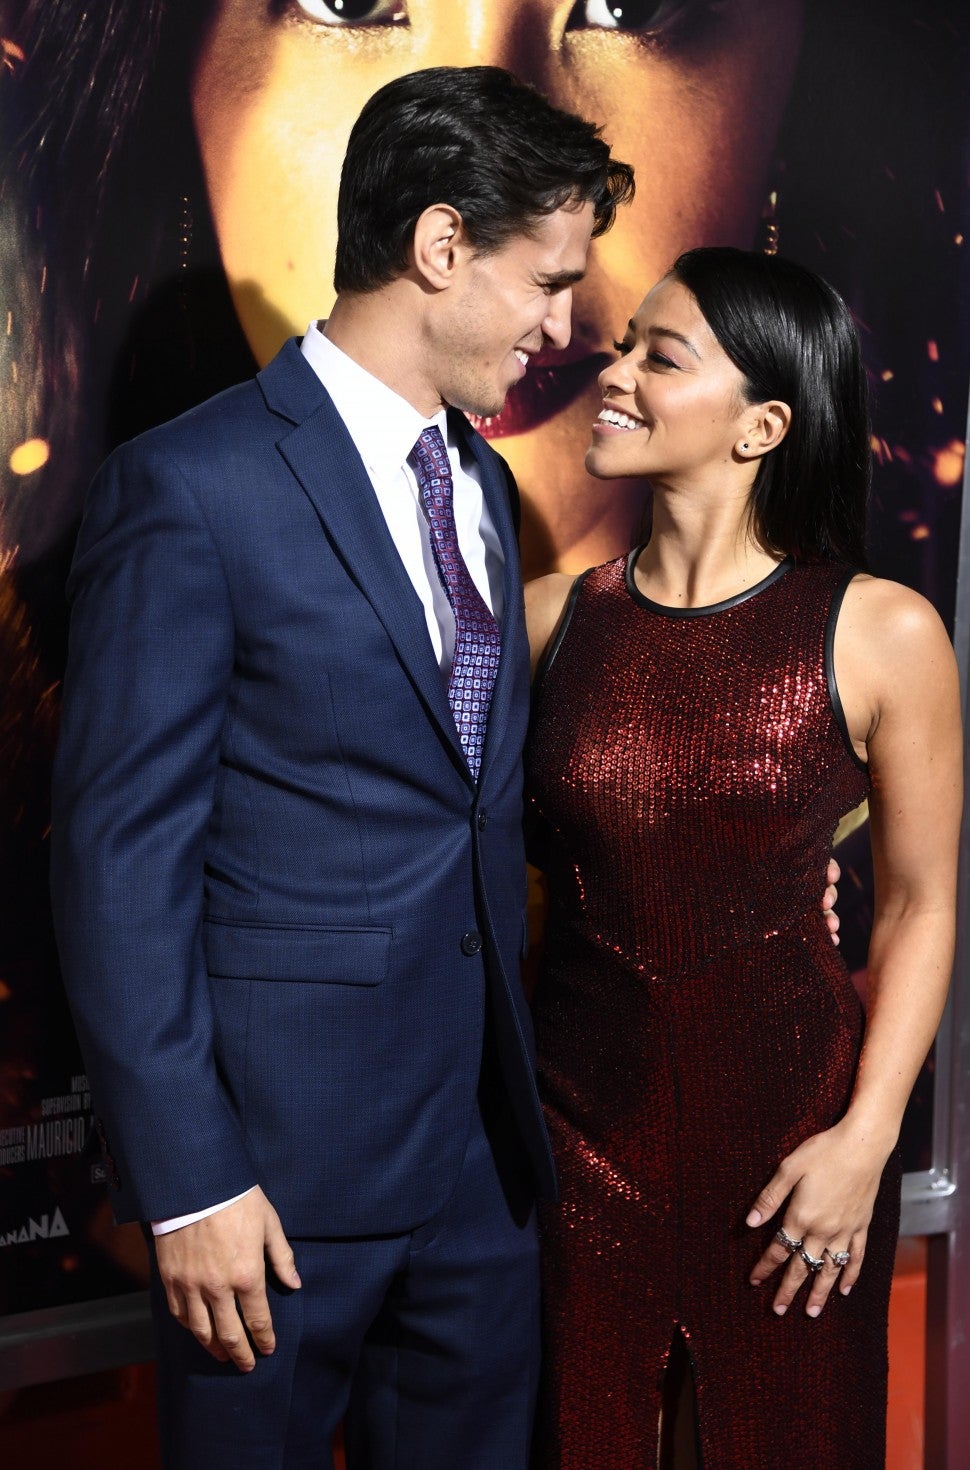 Gina Rodriguez and boyfriend at miss bala premiere